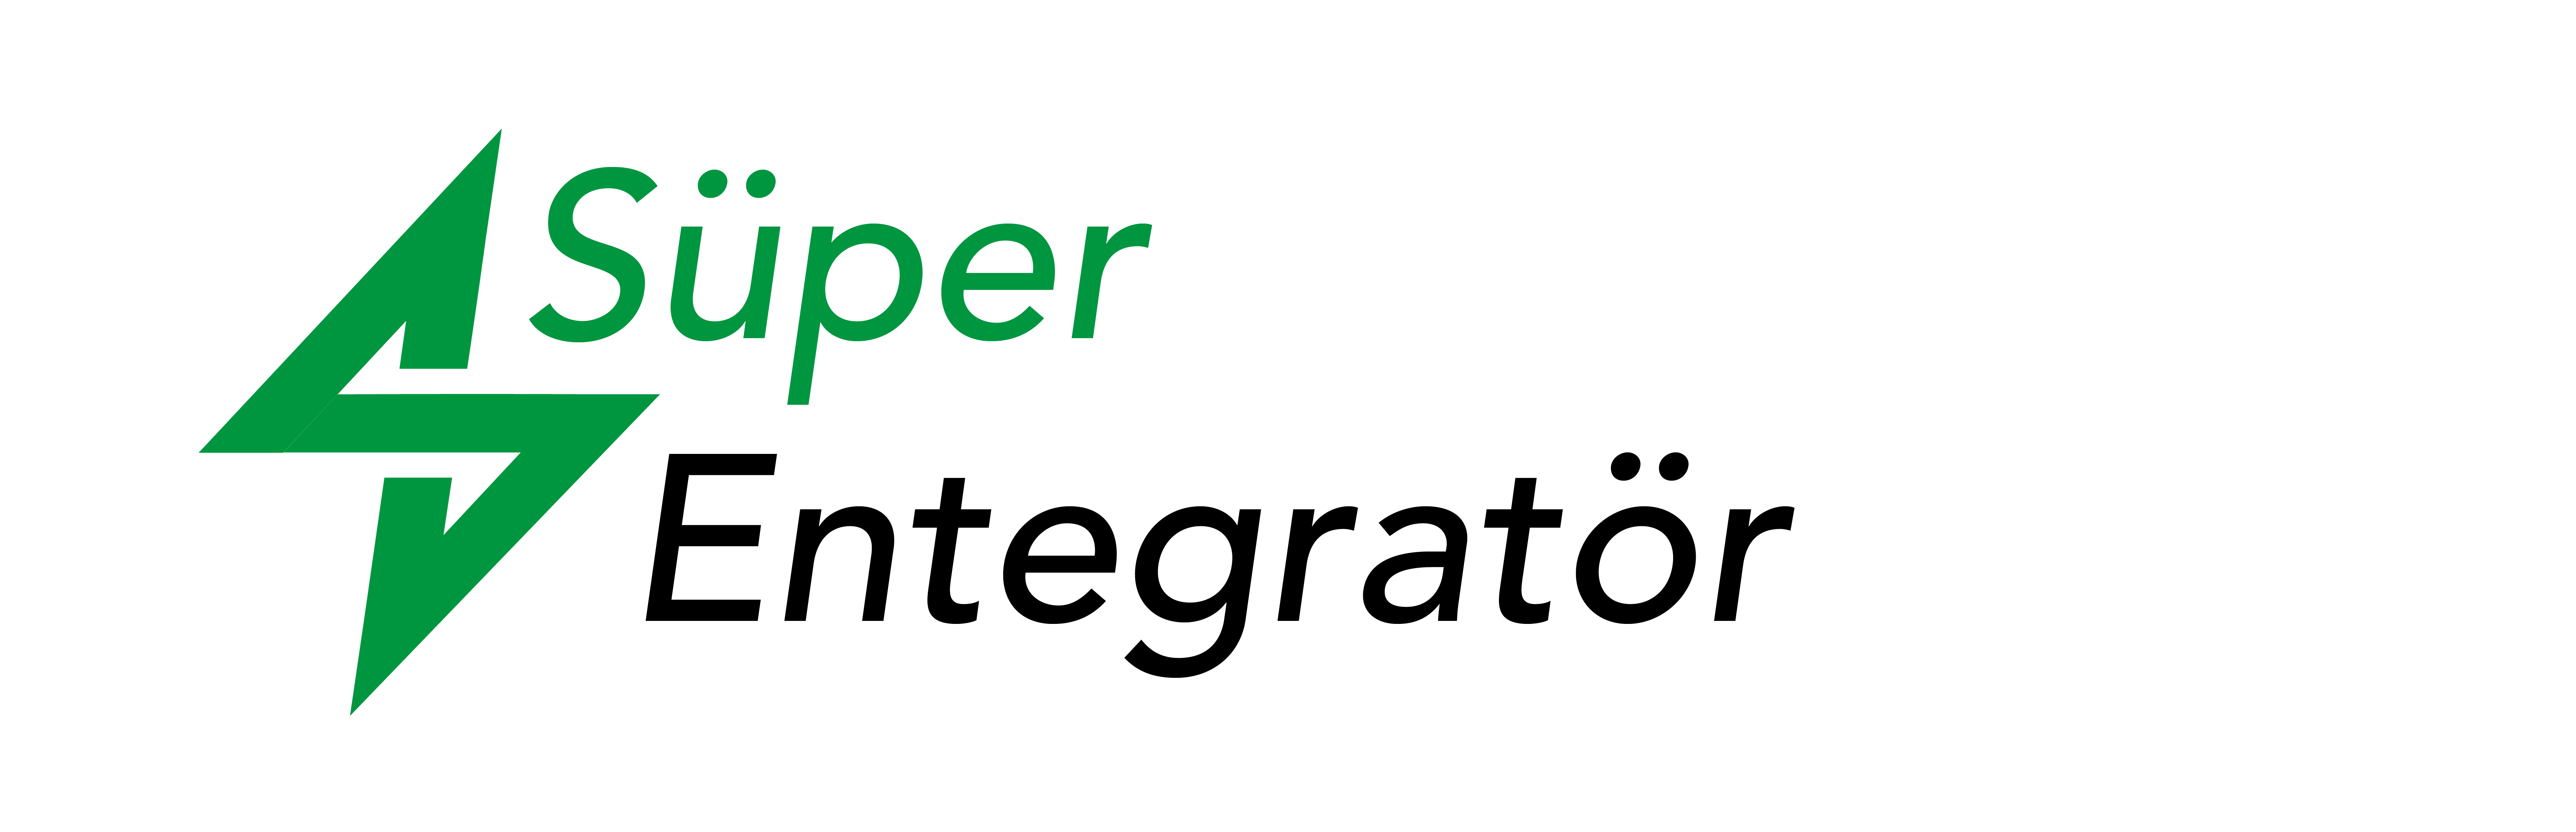 Super-Entegrator-Logo-01